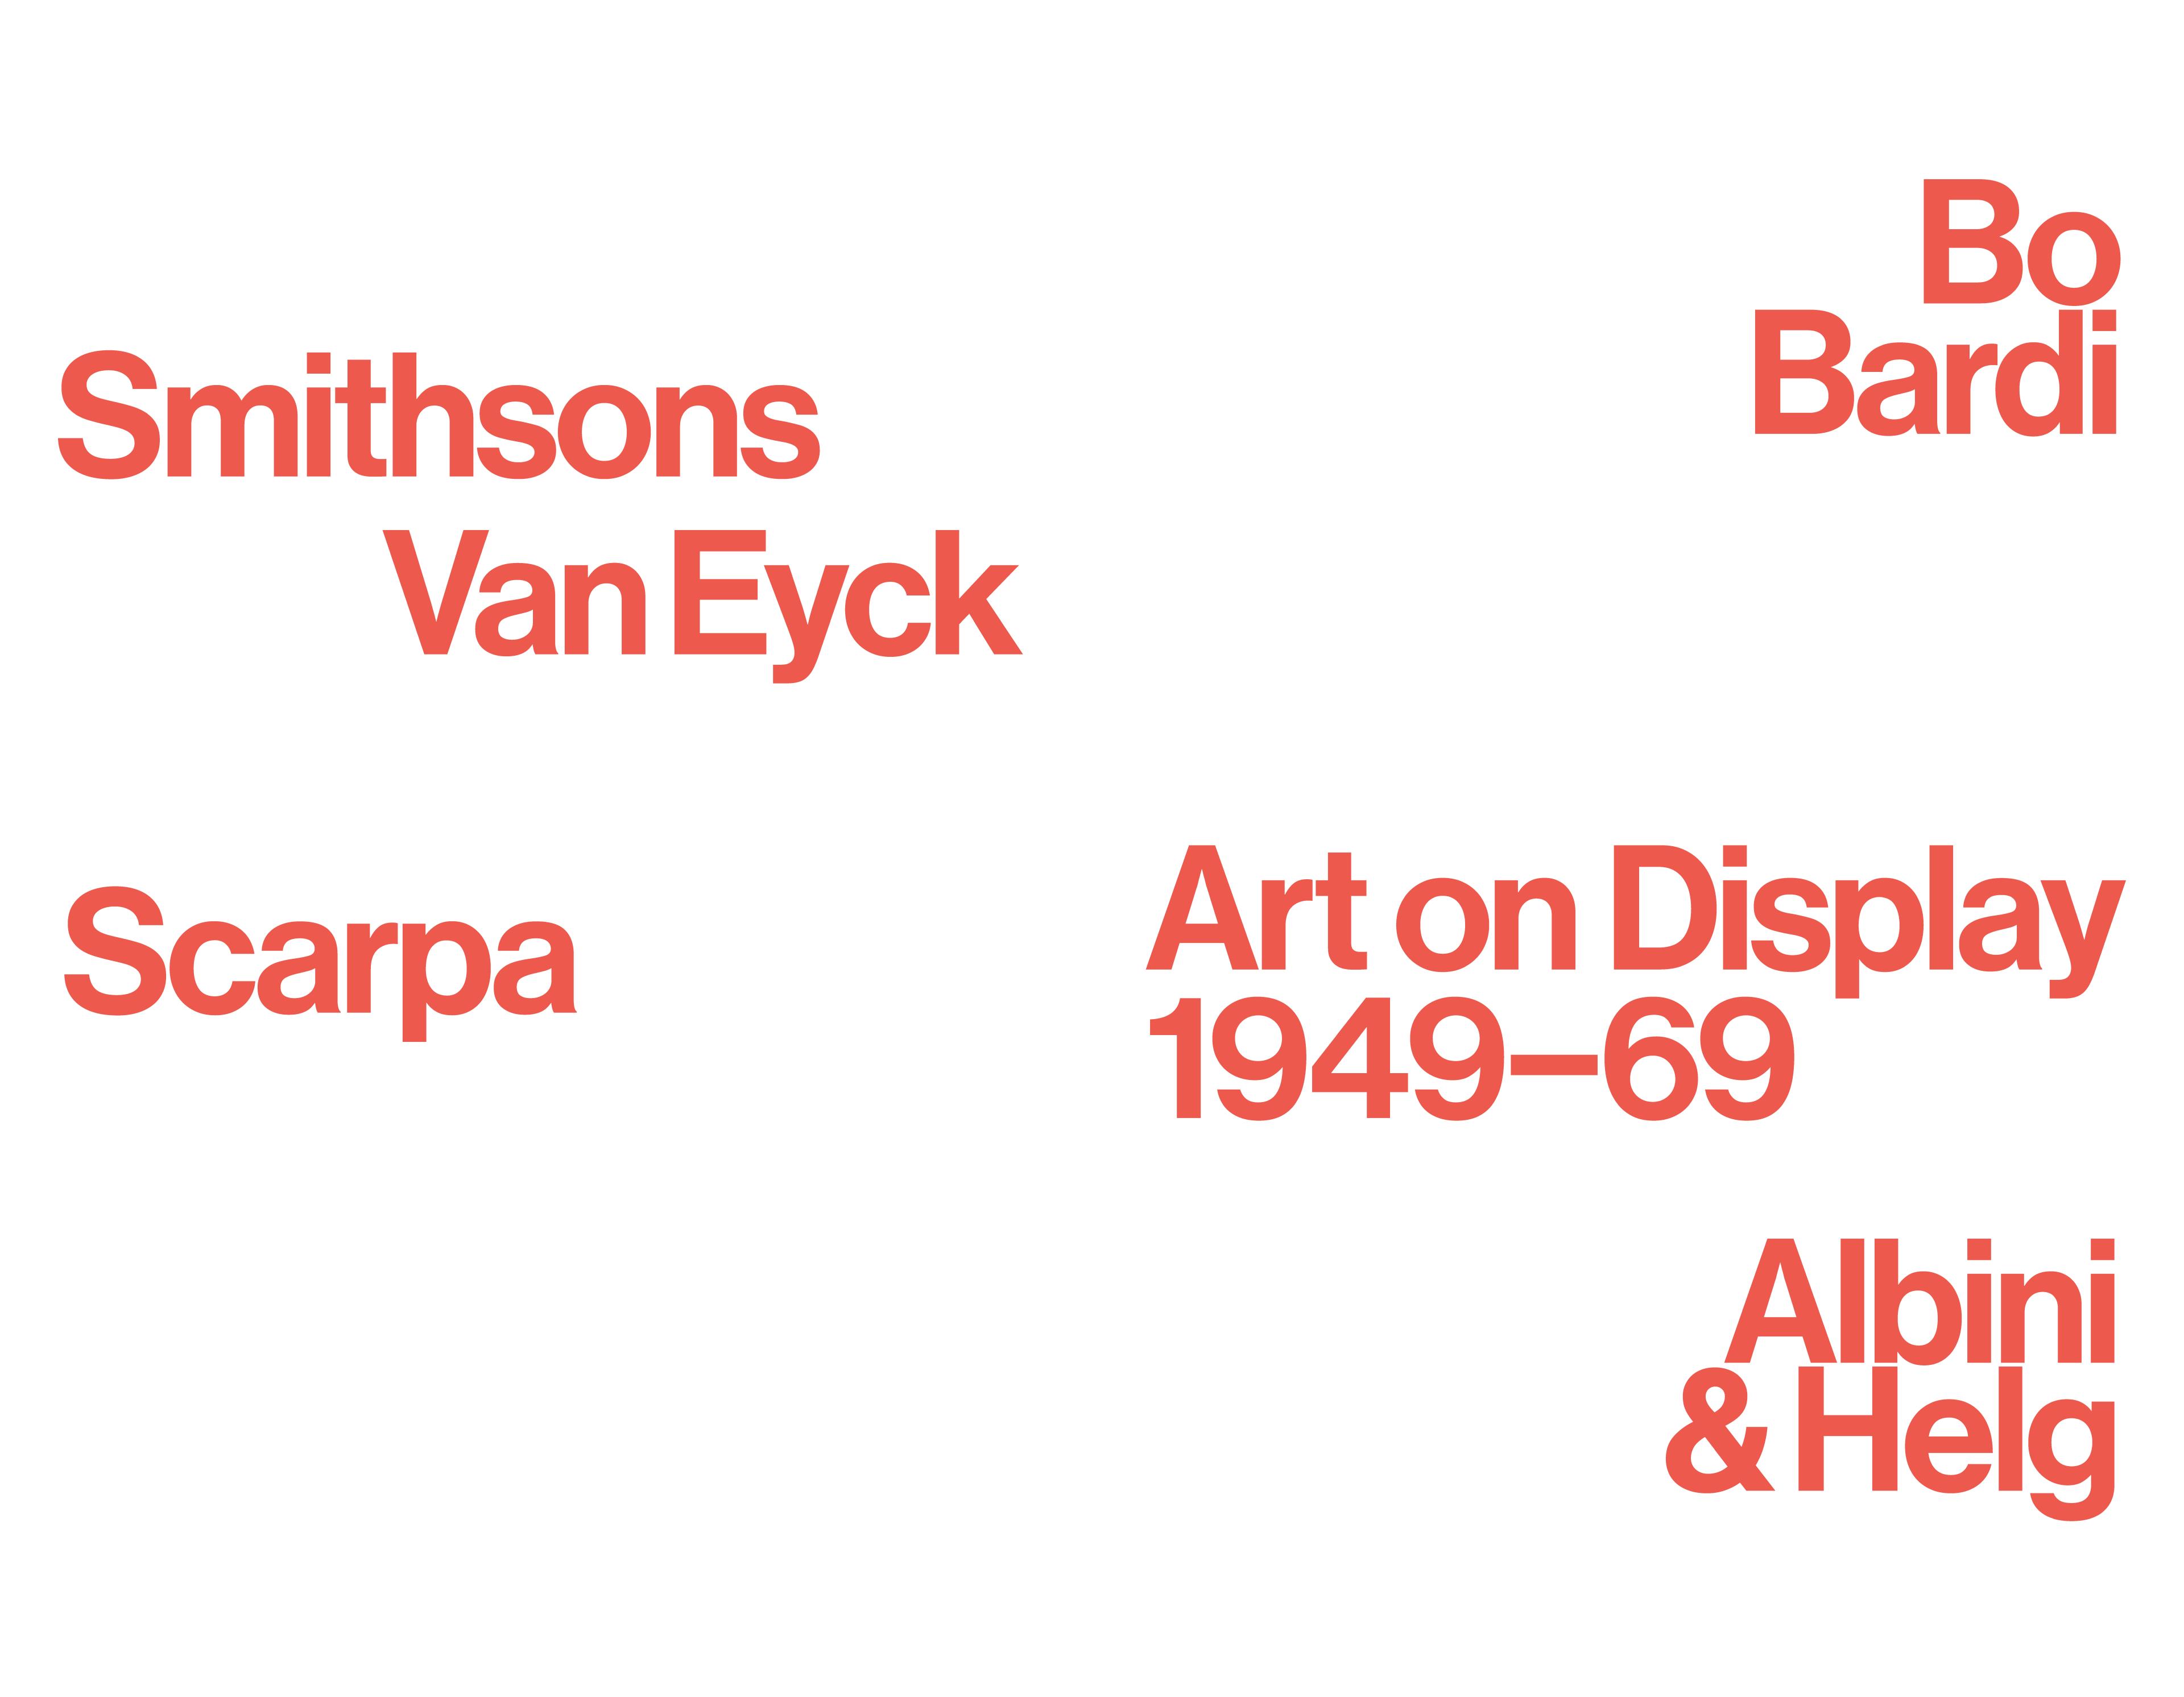 Art on Display. Formas de expor 1949 – 69